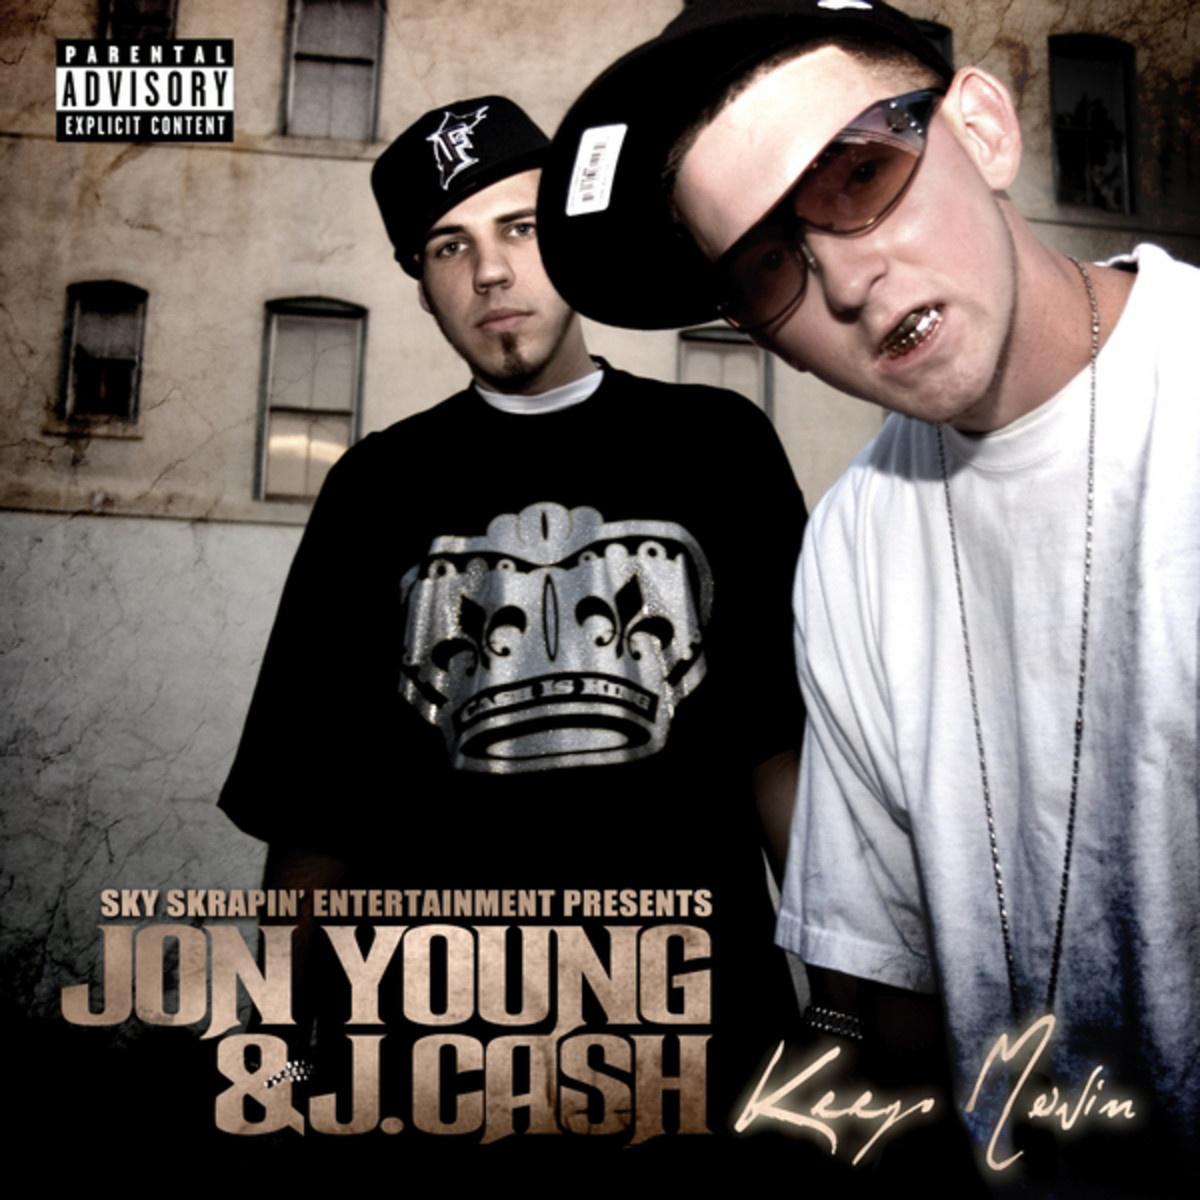 Jon Young & J. Cash - Get It